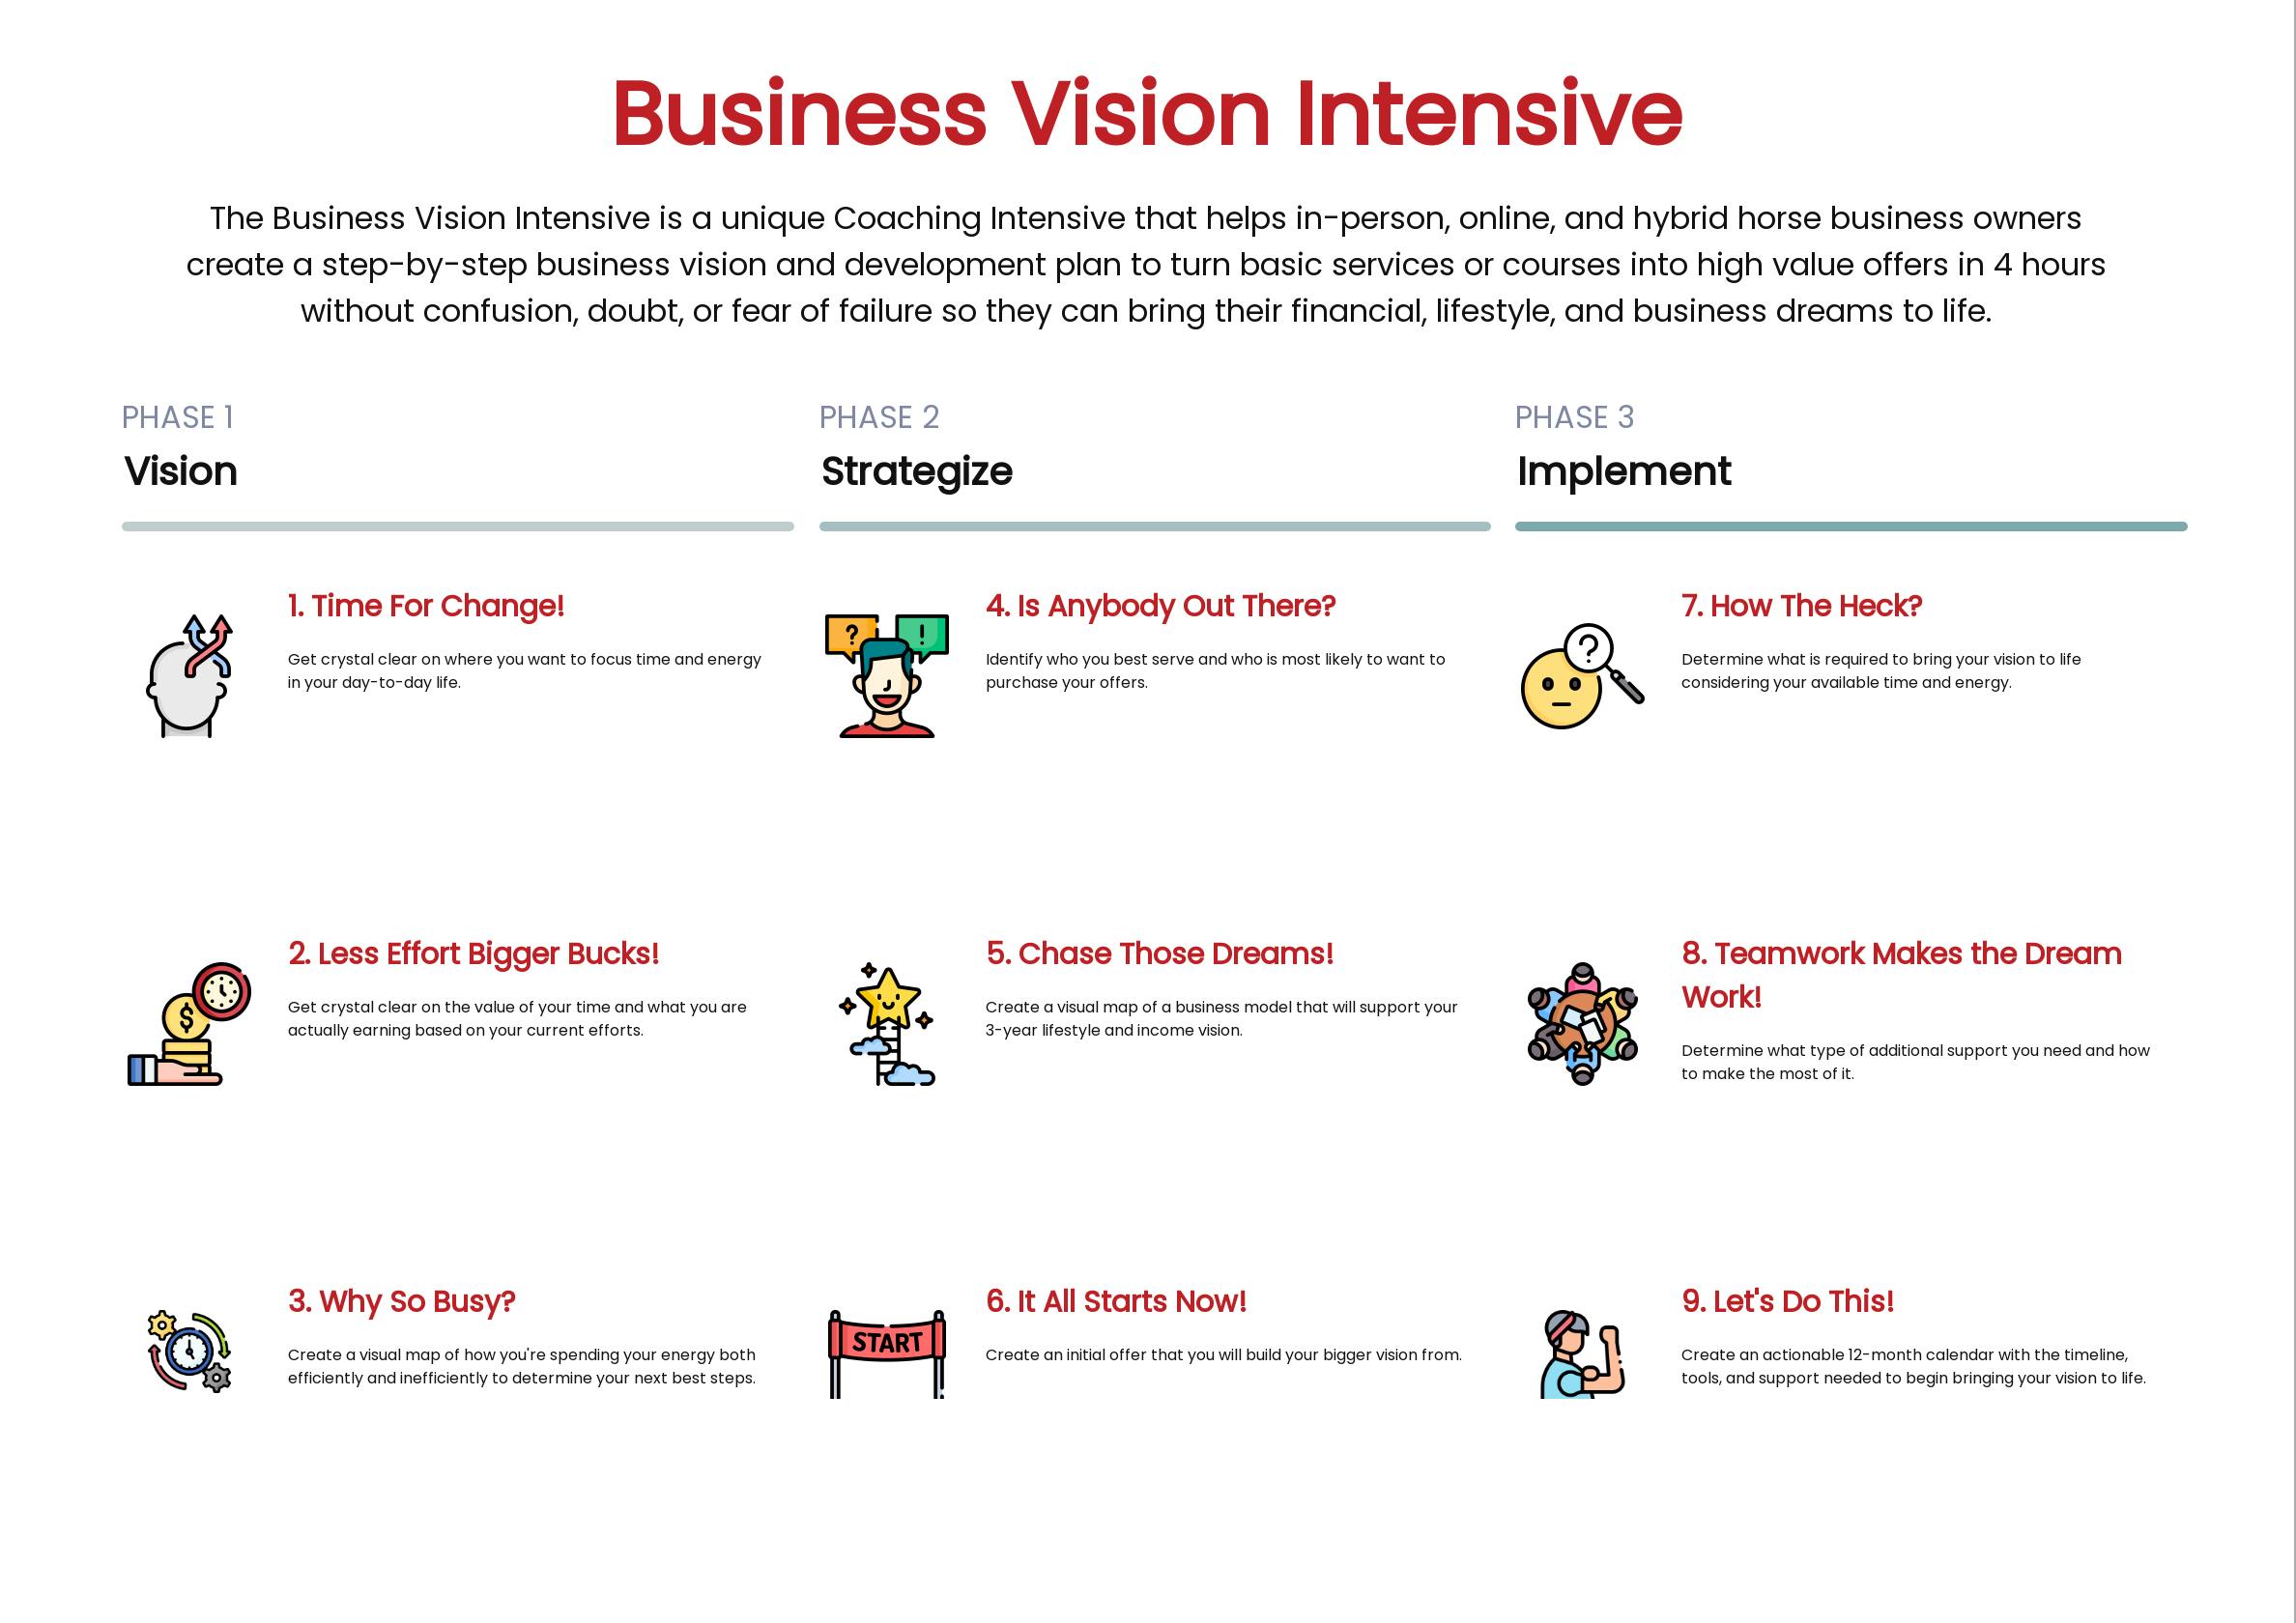 Business Vision Intensive Roadmap